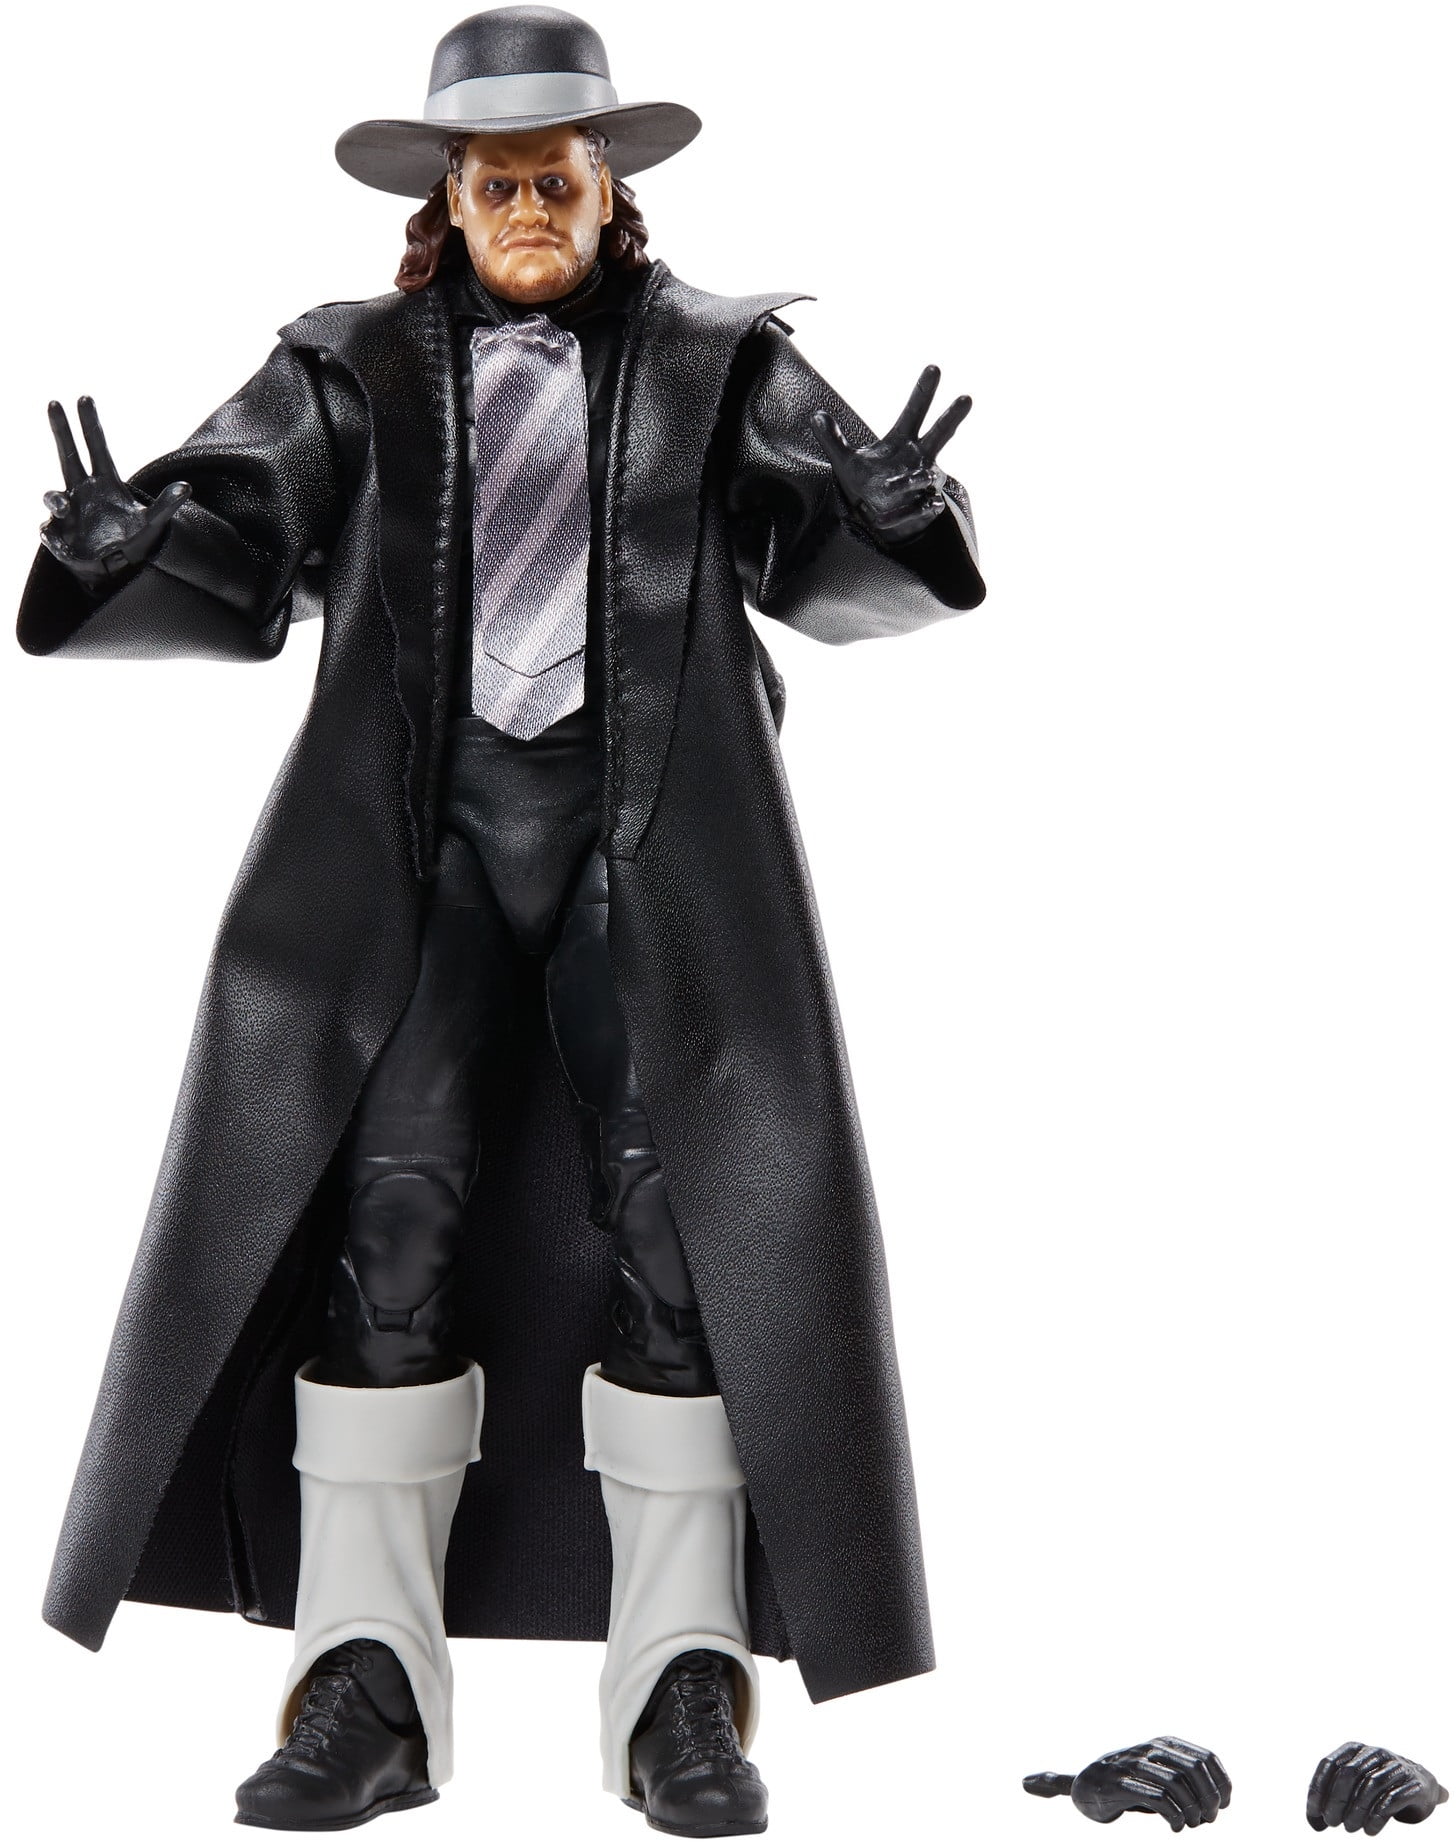 WWE Elite 79 Undertaker Collectors Edition Mattel Wrestling Figure for sale online 